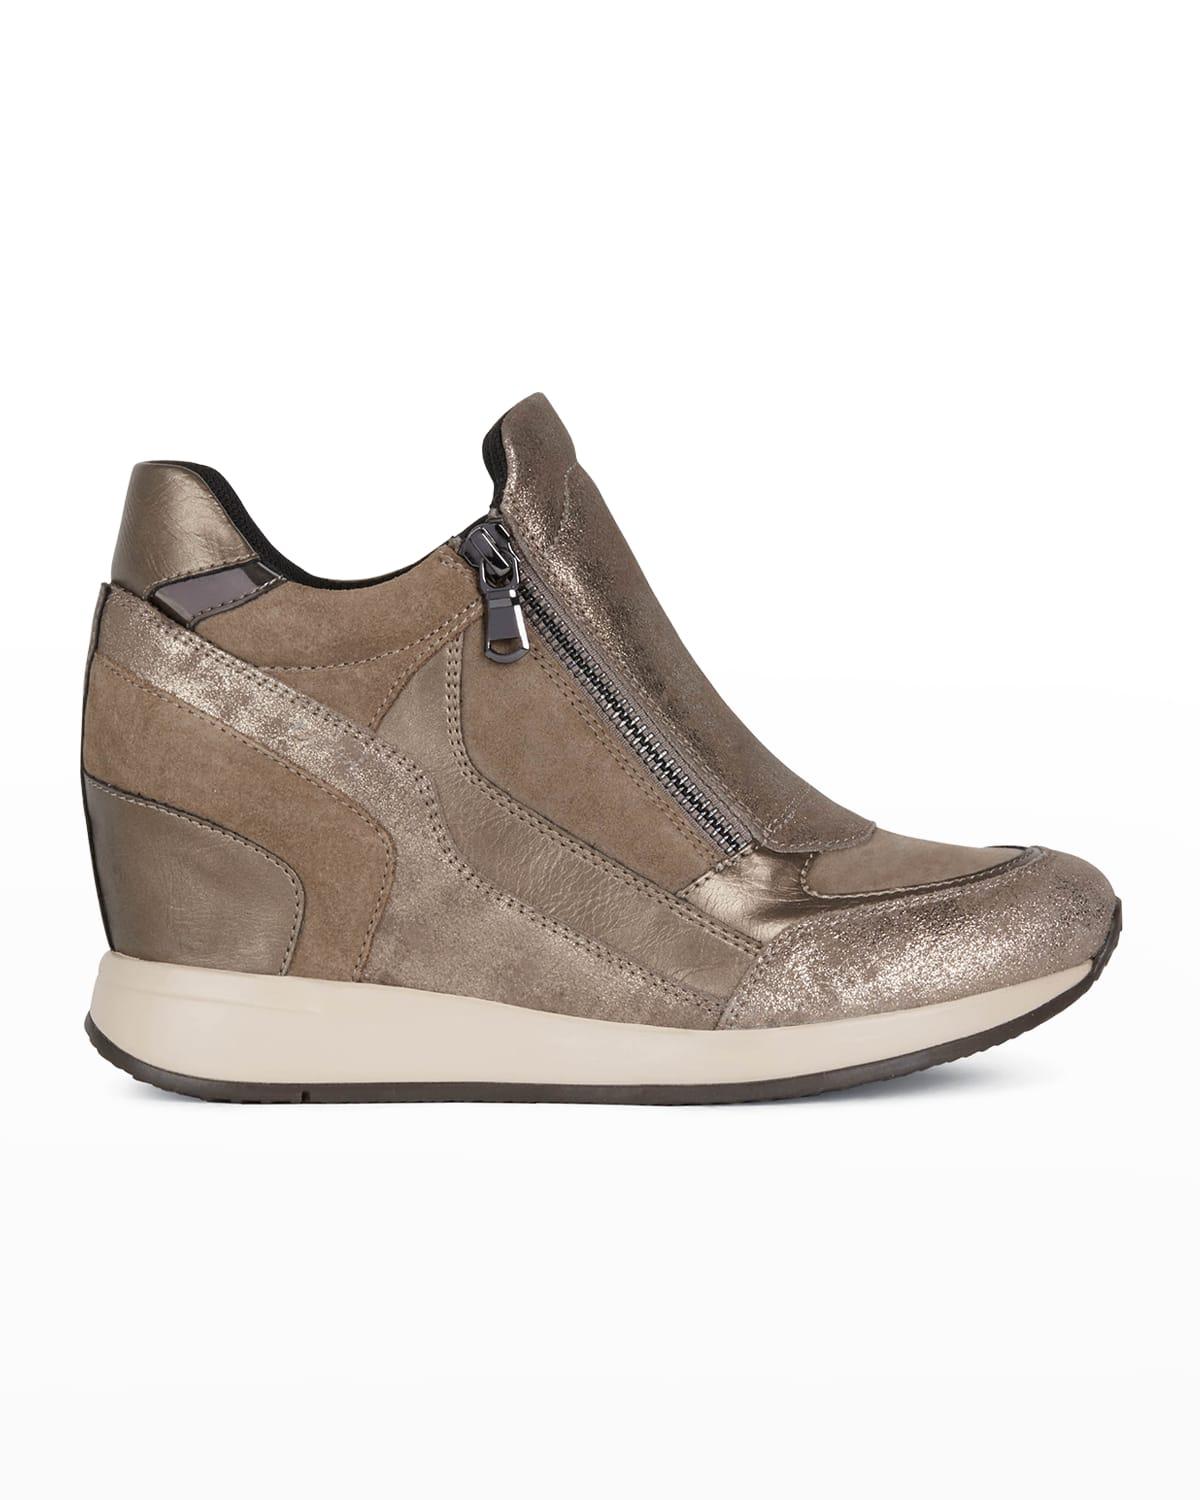 Geox Nydame Metallic Zip Fashion Sneakers in Brown | Lyst